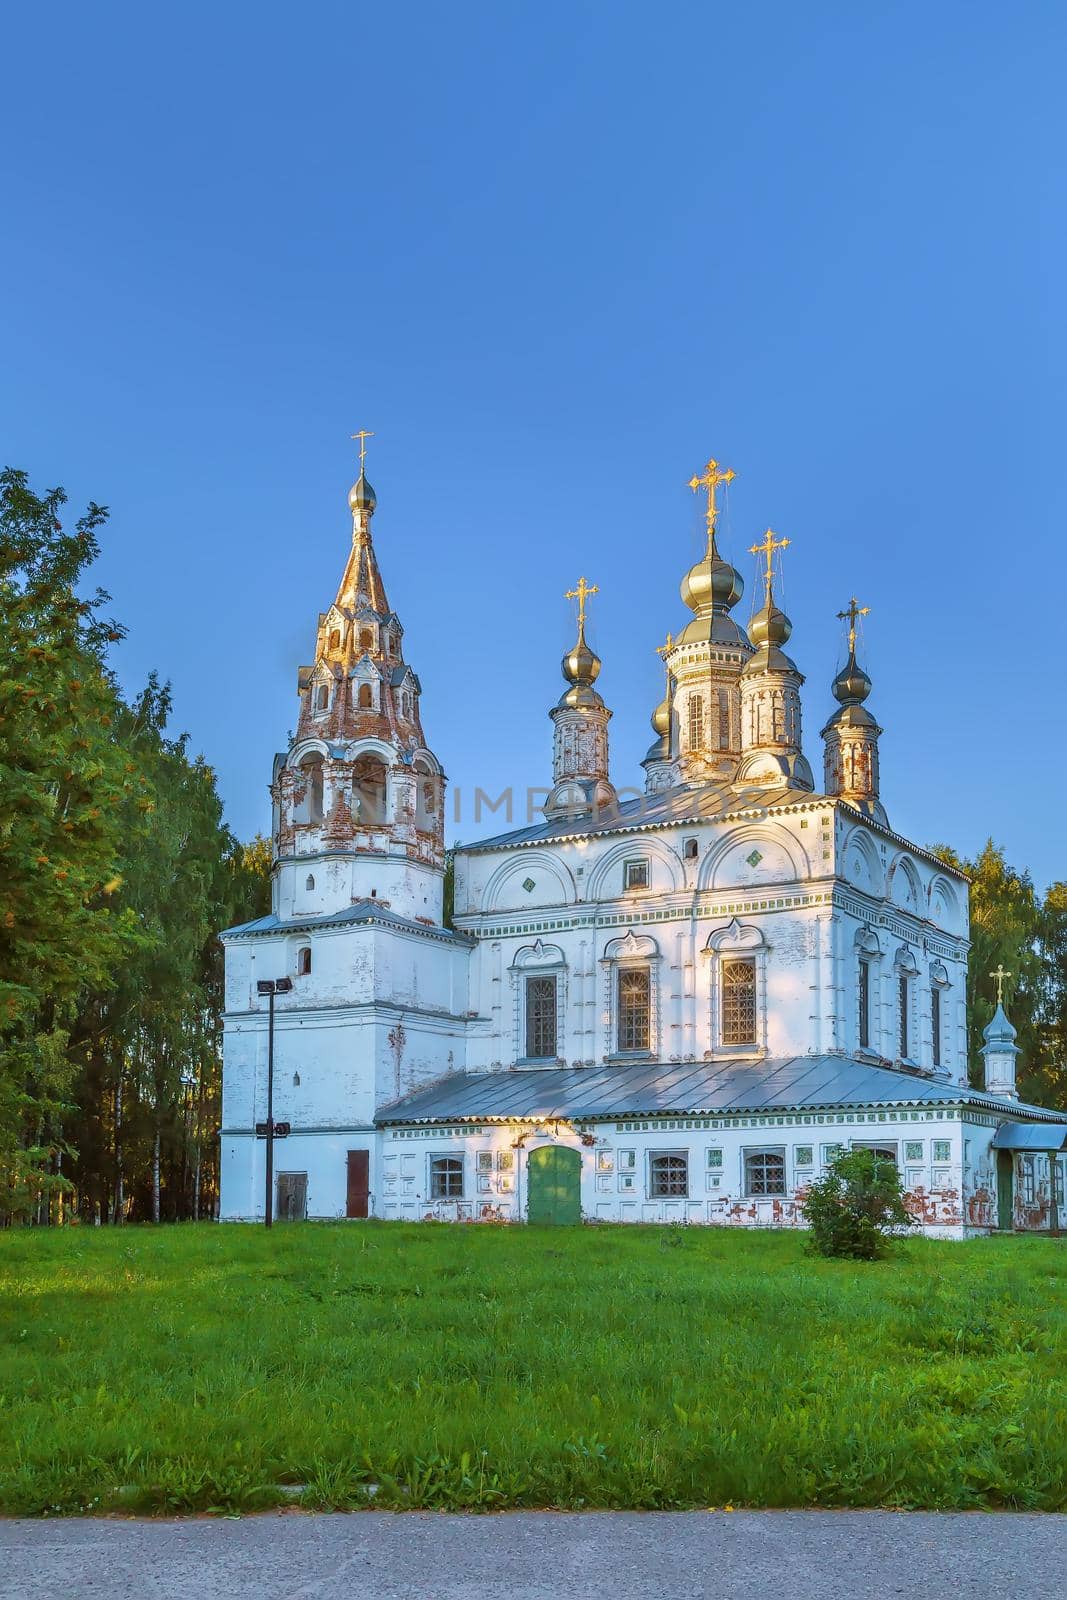 Transfiguration Church (1689 – 1696) in Veliky Ustyug, Russia